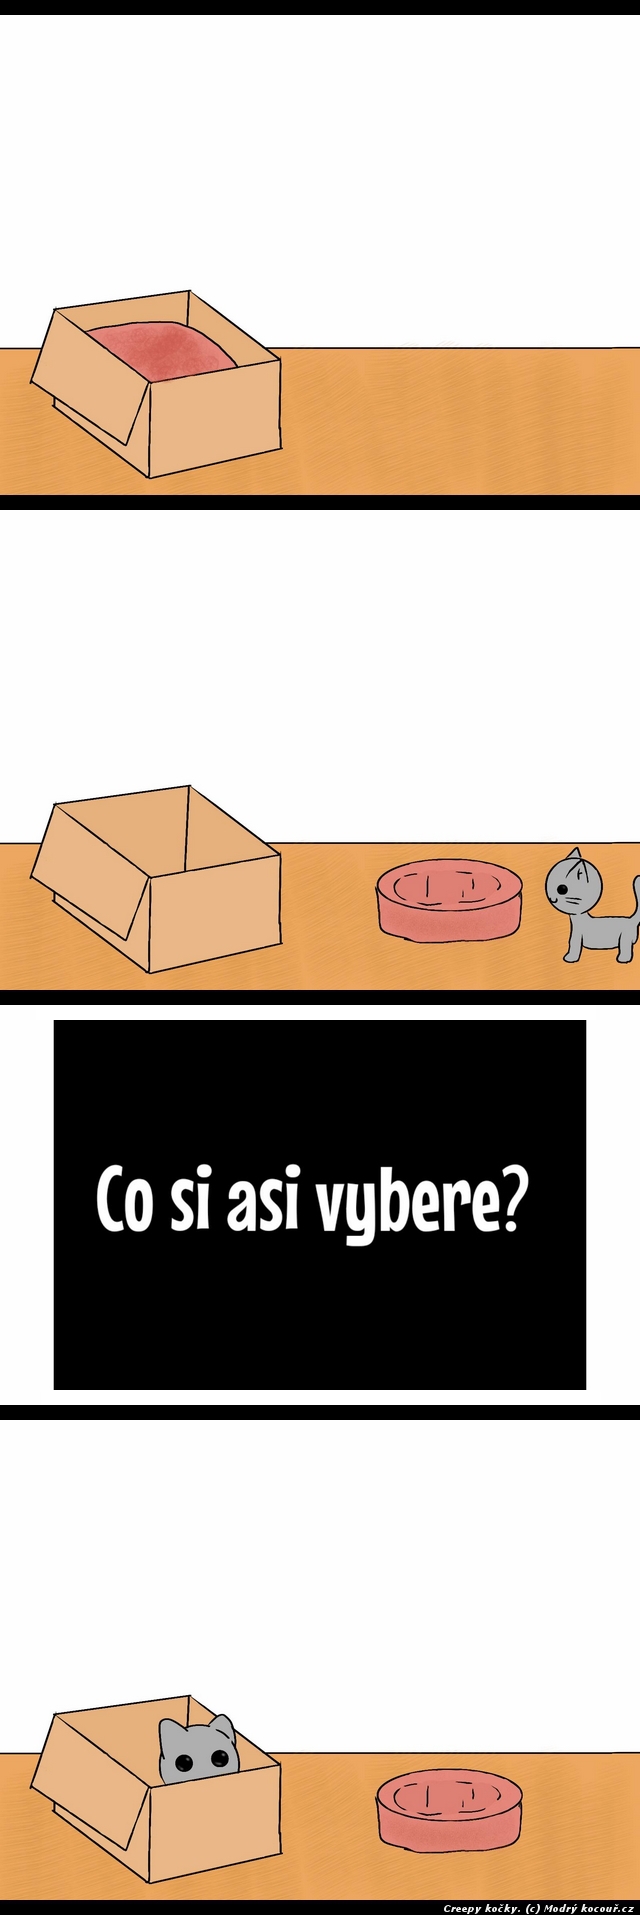 Komiks Creepy koky: Co si asi vybere? Modr kocou.cz